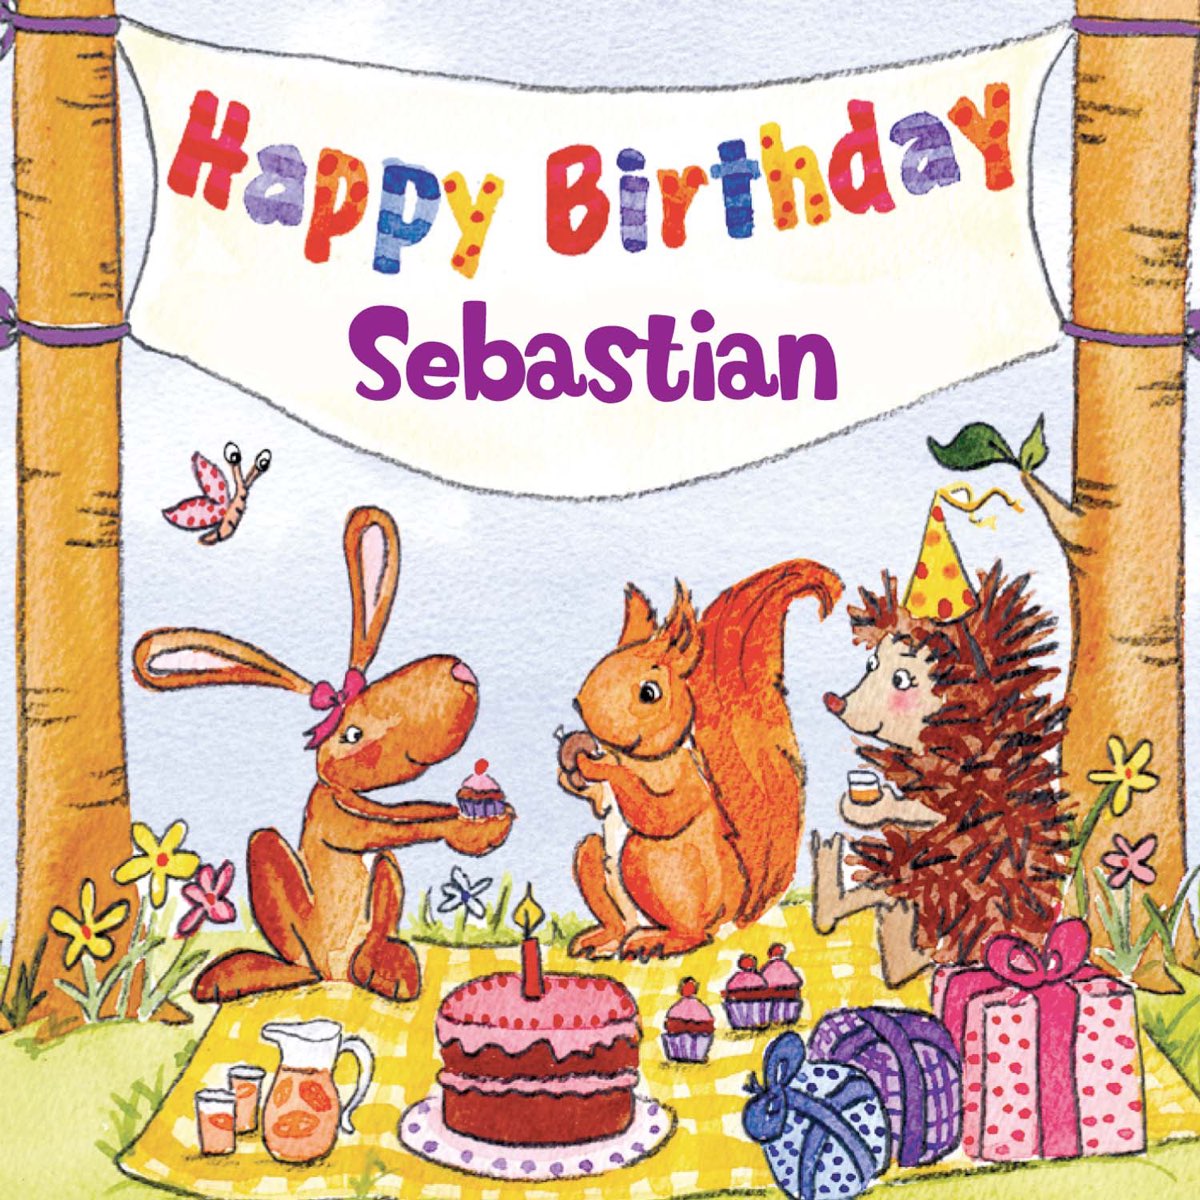 Happy Birthday Sebastian by The Birthday Bunch.